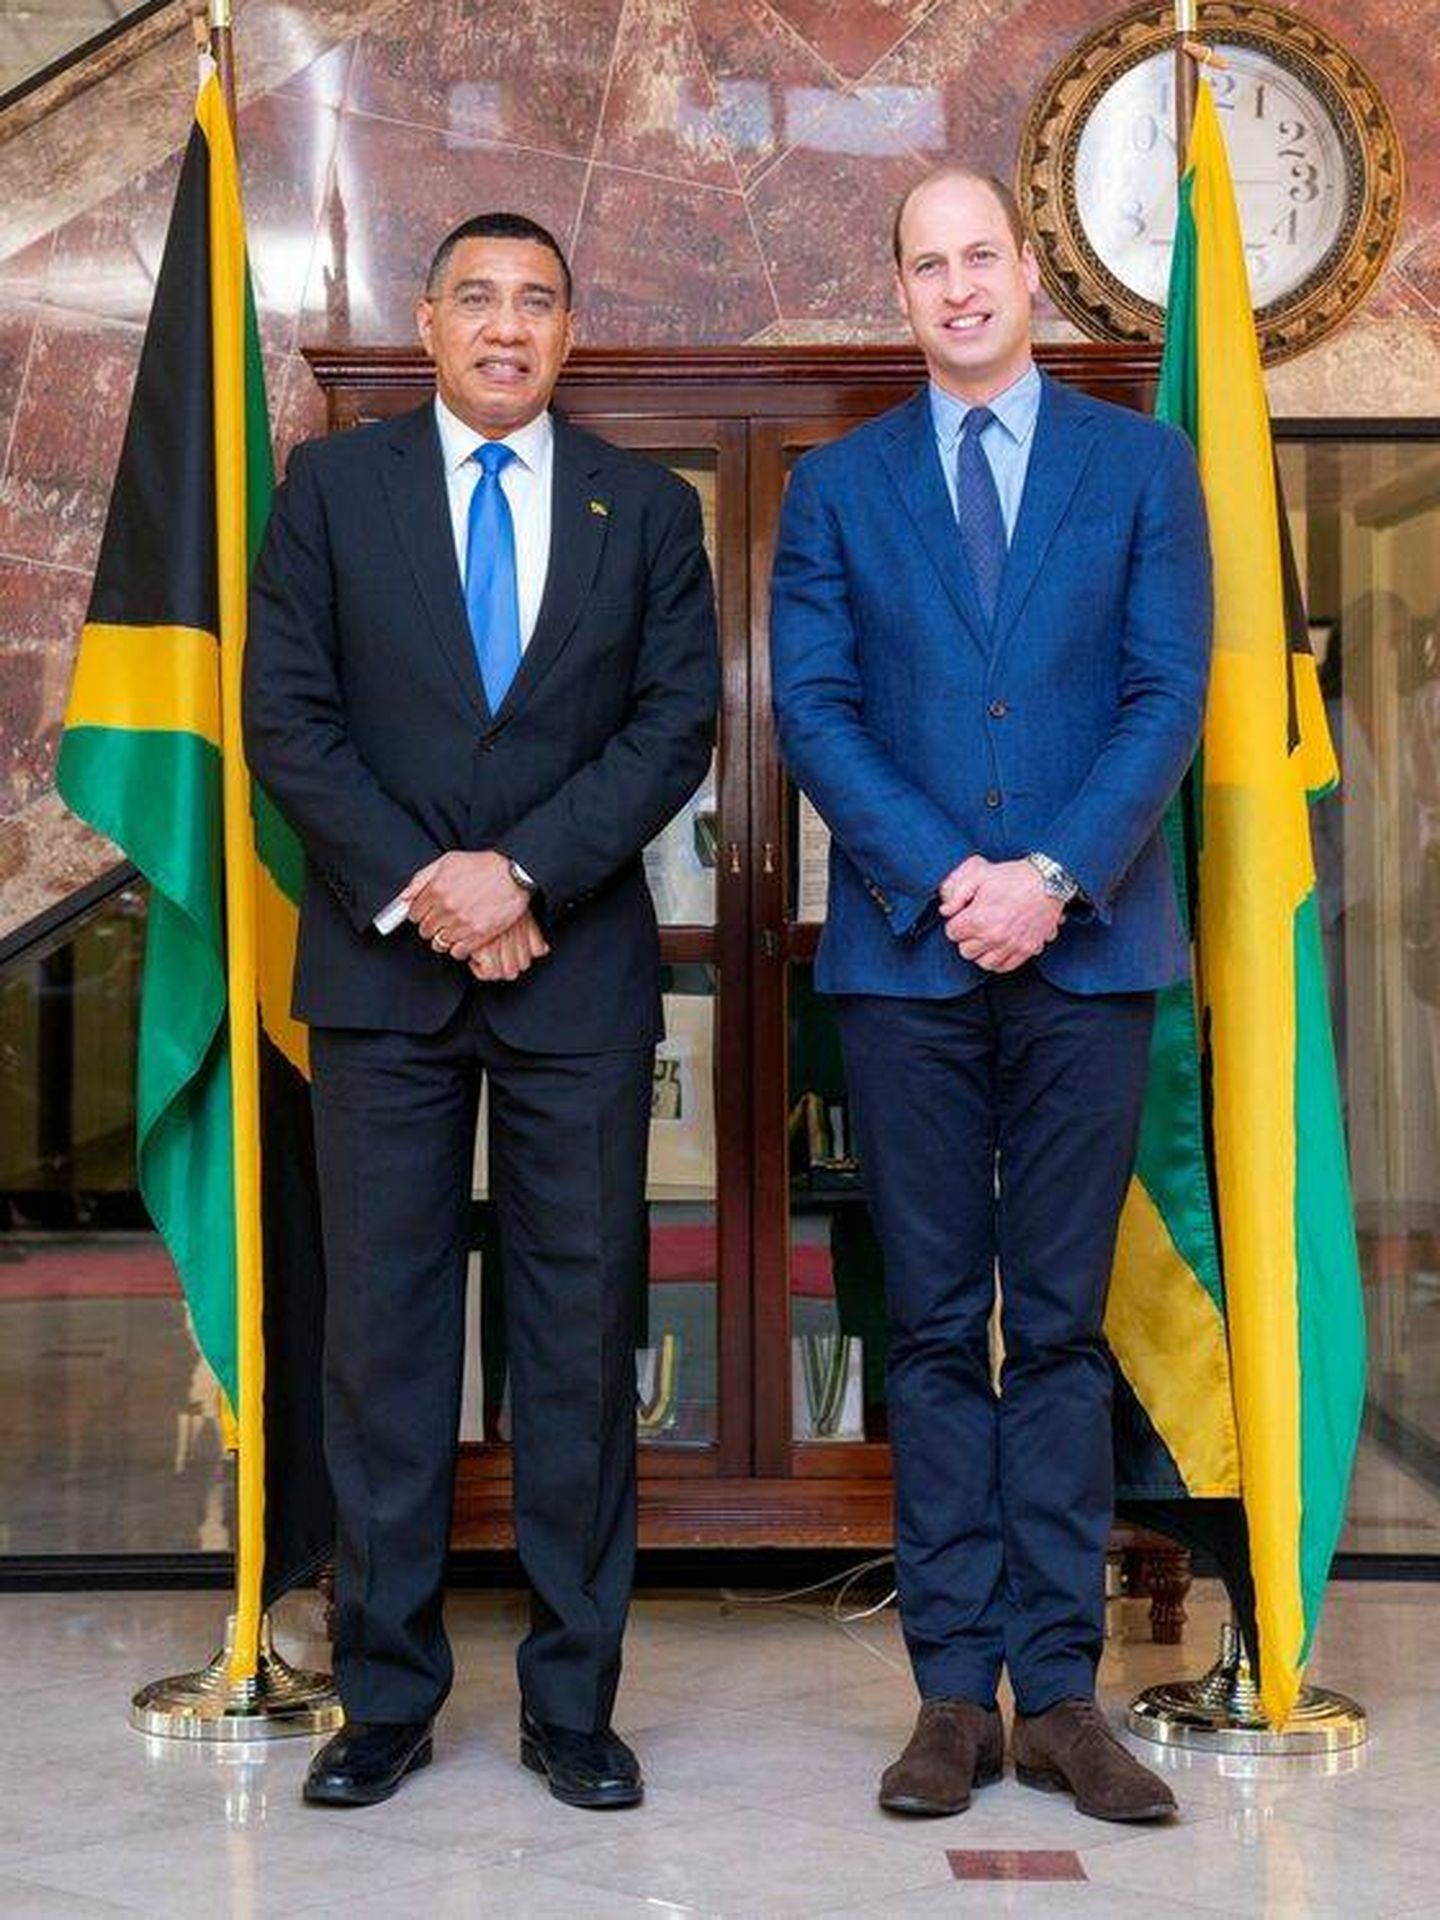  El príncipe Guillermo, junto al primer ministro Andrew Holness. (Reuters/Jane Barlow)